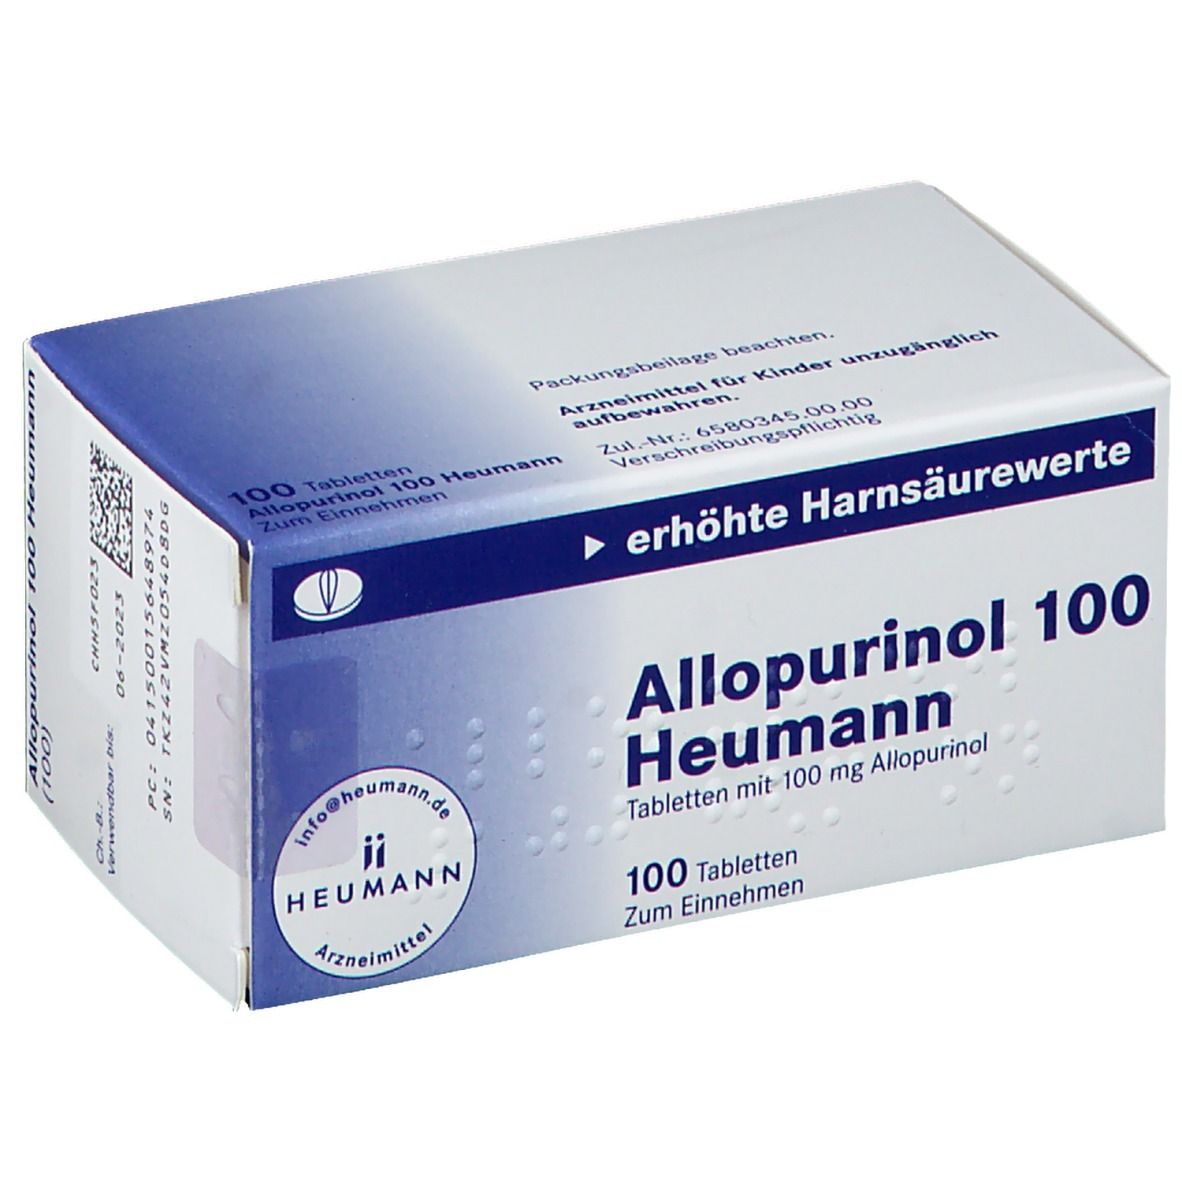 Аллопуринол 100 отзывы аналоги таблетки. Аллопуринол таблетки 100 мг. Аллопуринол 80 мг. Аллопуринол 900 мг. Аллопуринол производитель Германия.